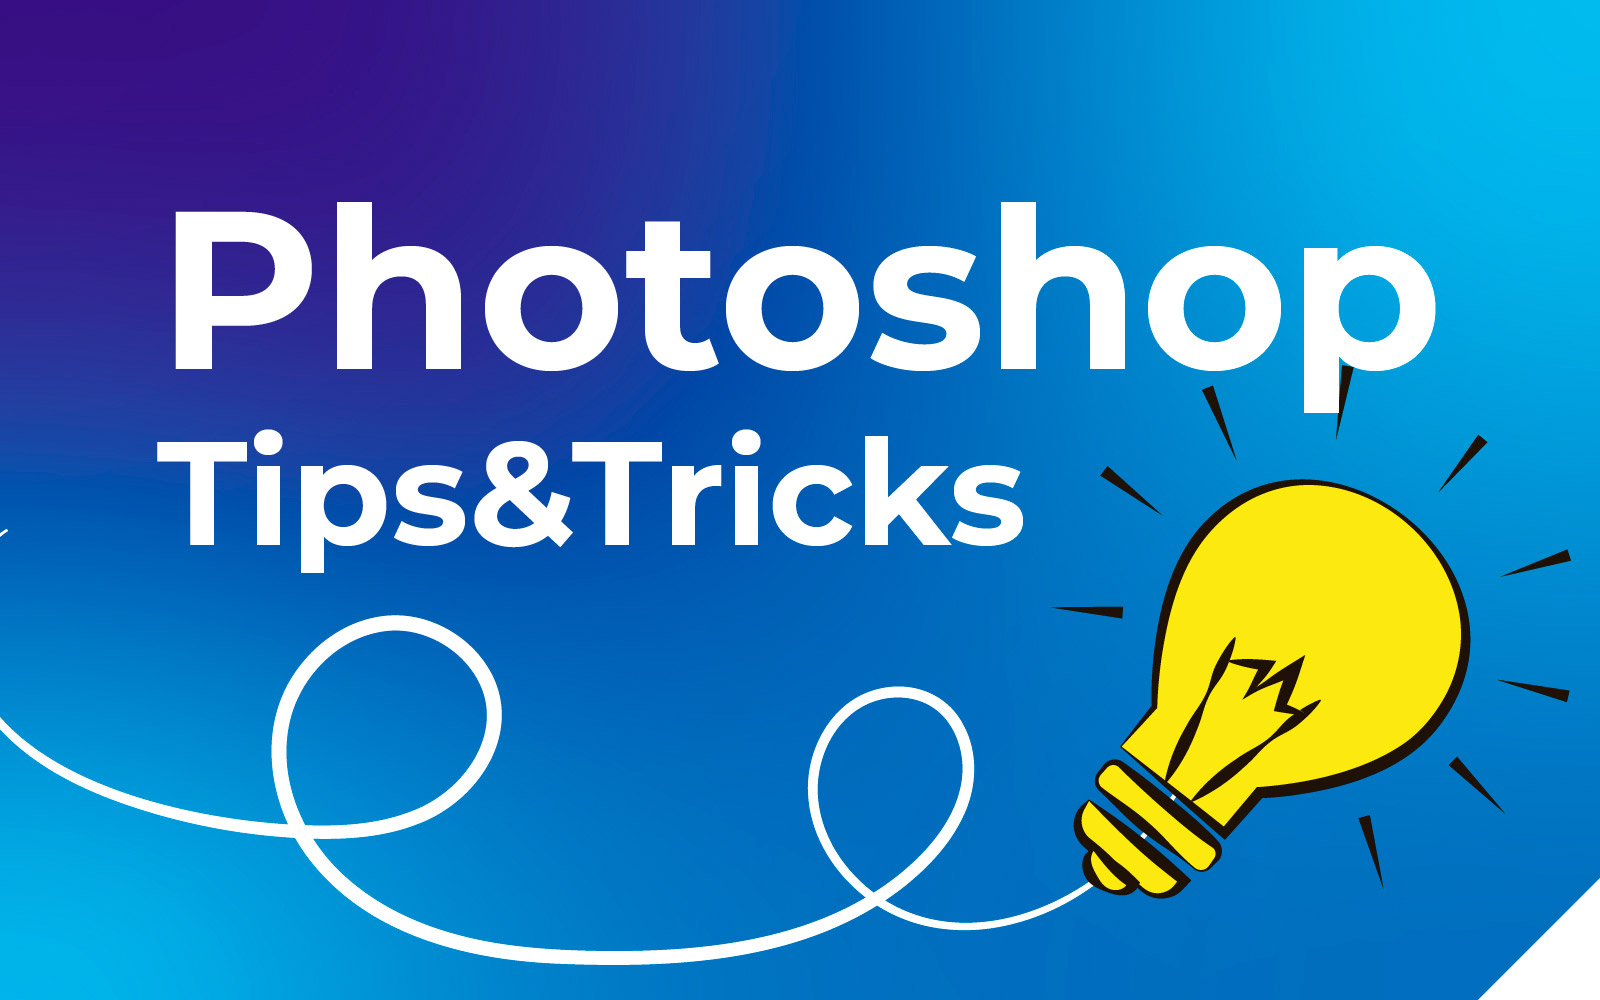 Photoshop Tips&Tricks